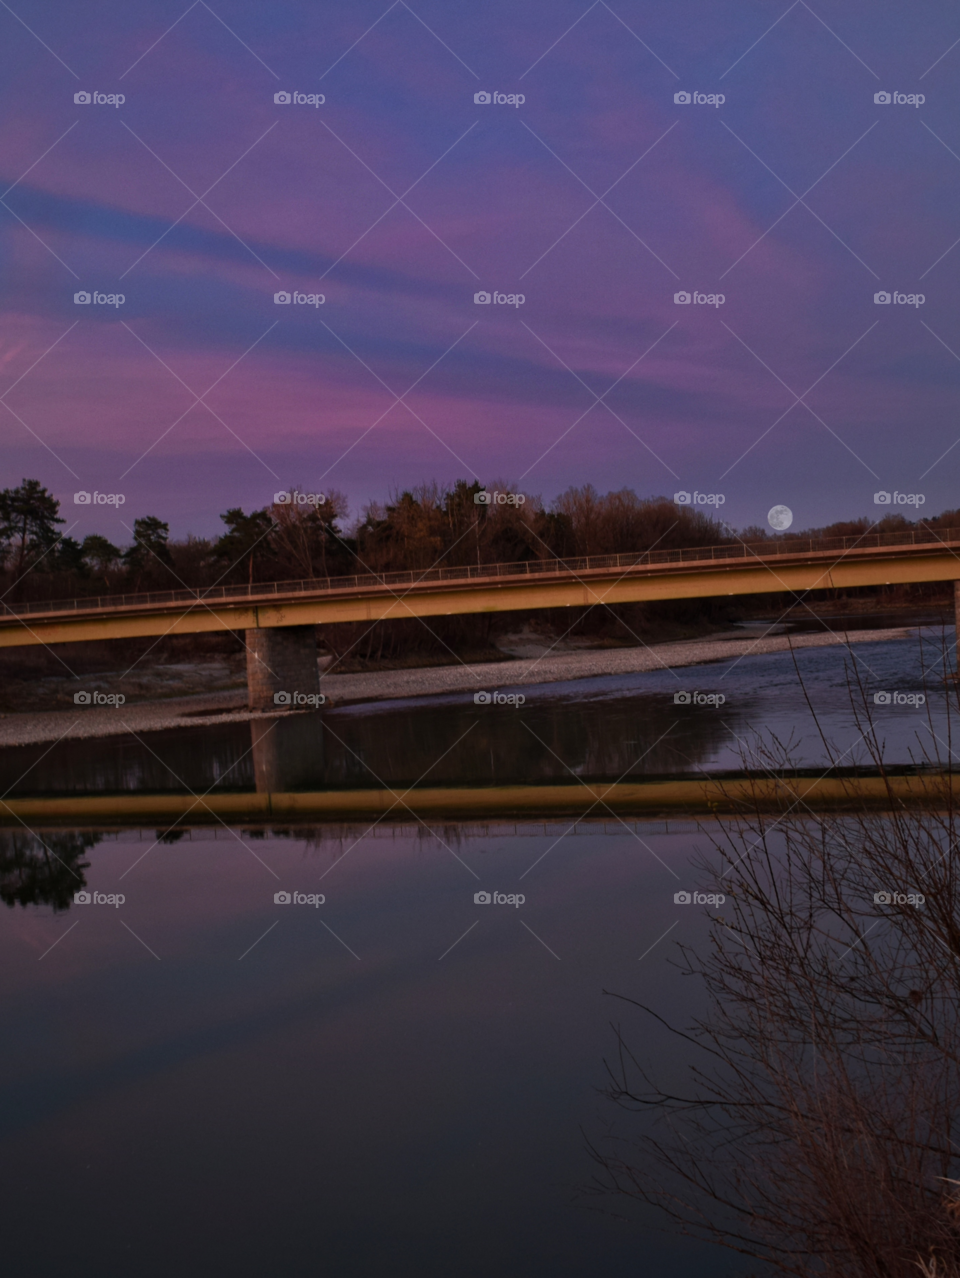 sunset bridges reflection on water